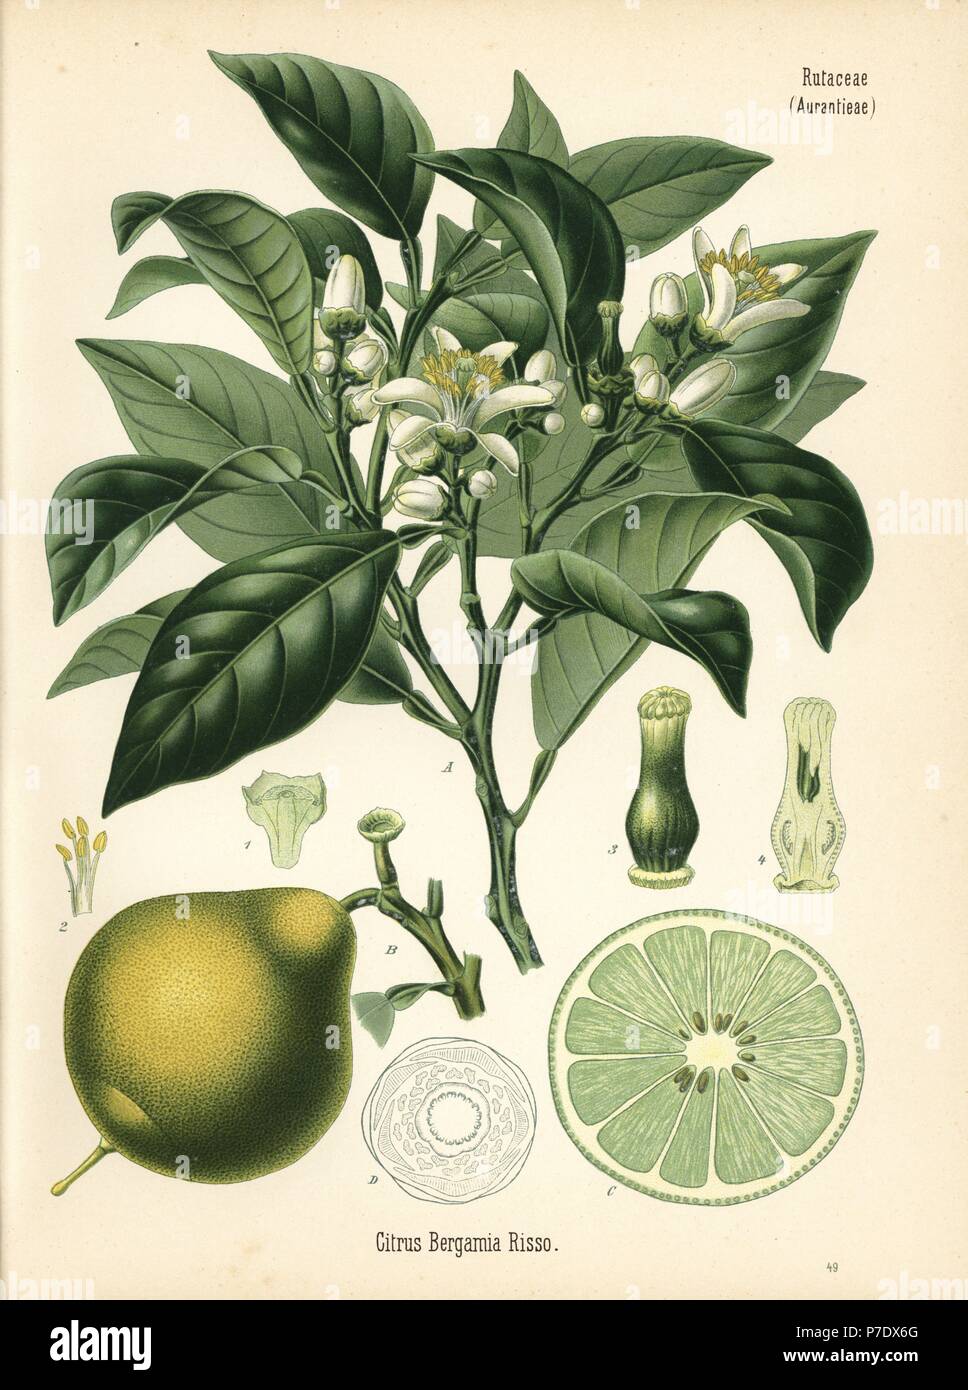 Bergamot orange, Citrus bergamia. Chromolithograph after a botanical illustration from Hermann Adolph Koehler's Medicinal Plants, edited by Gustav Pabst, Koehler, Germany, 1887. Stock Photo